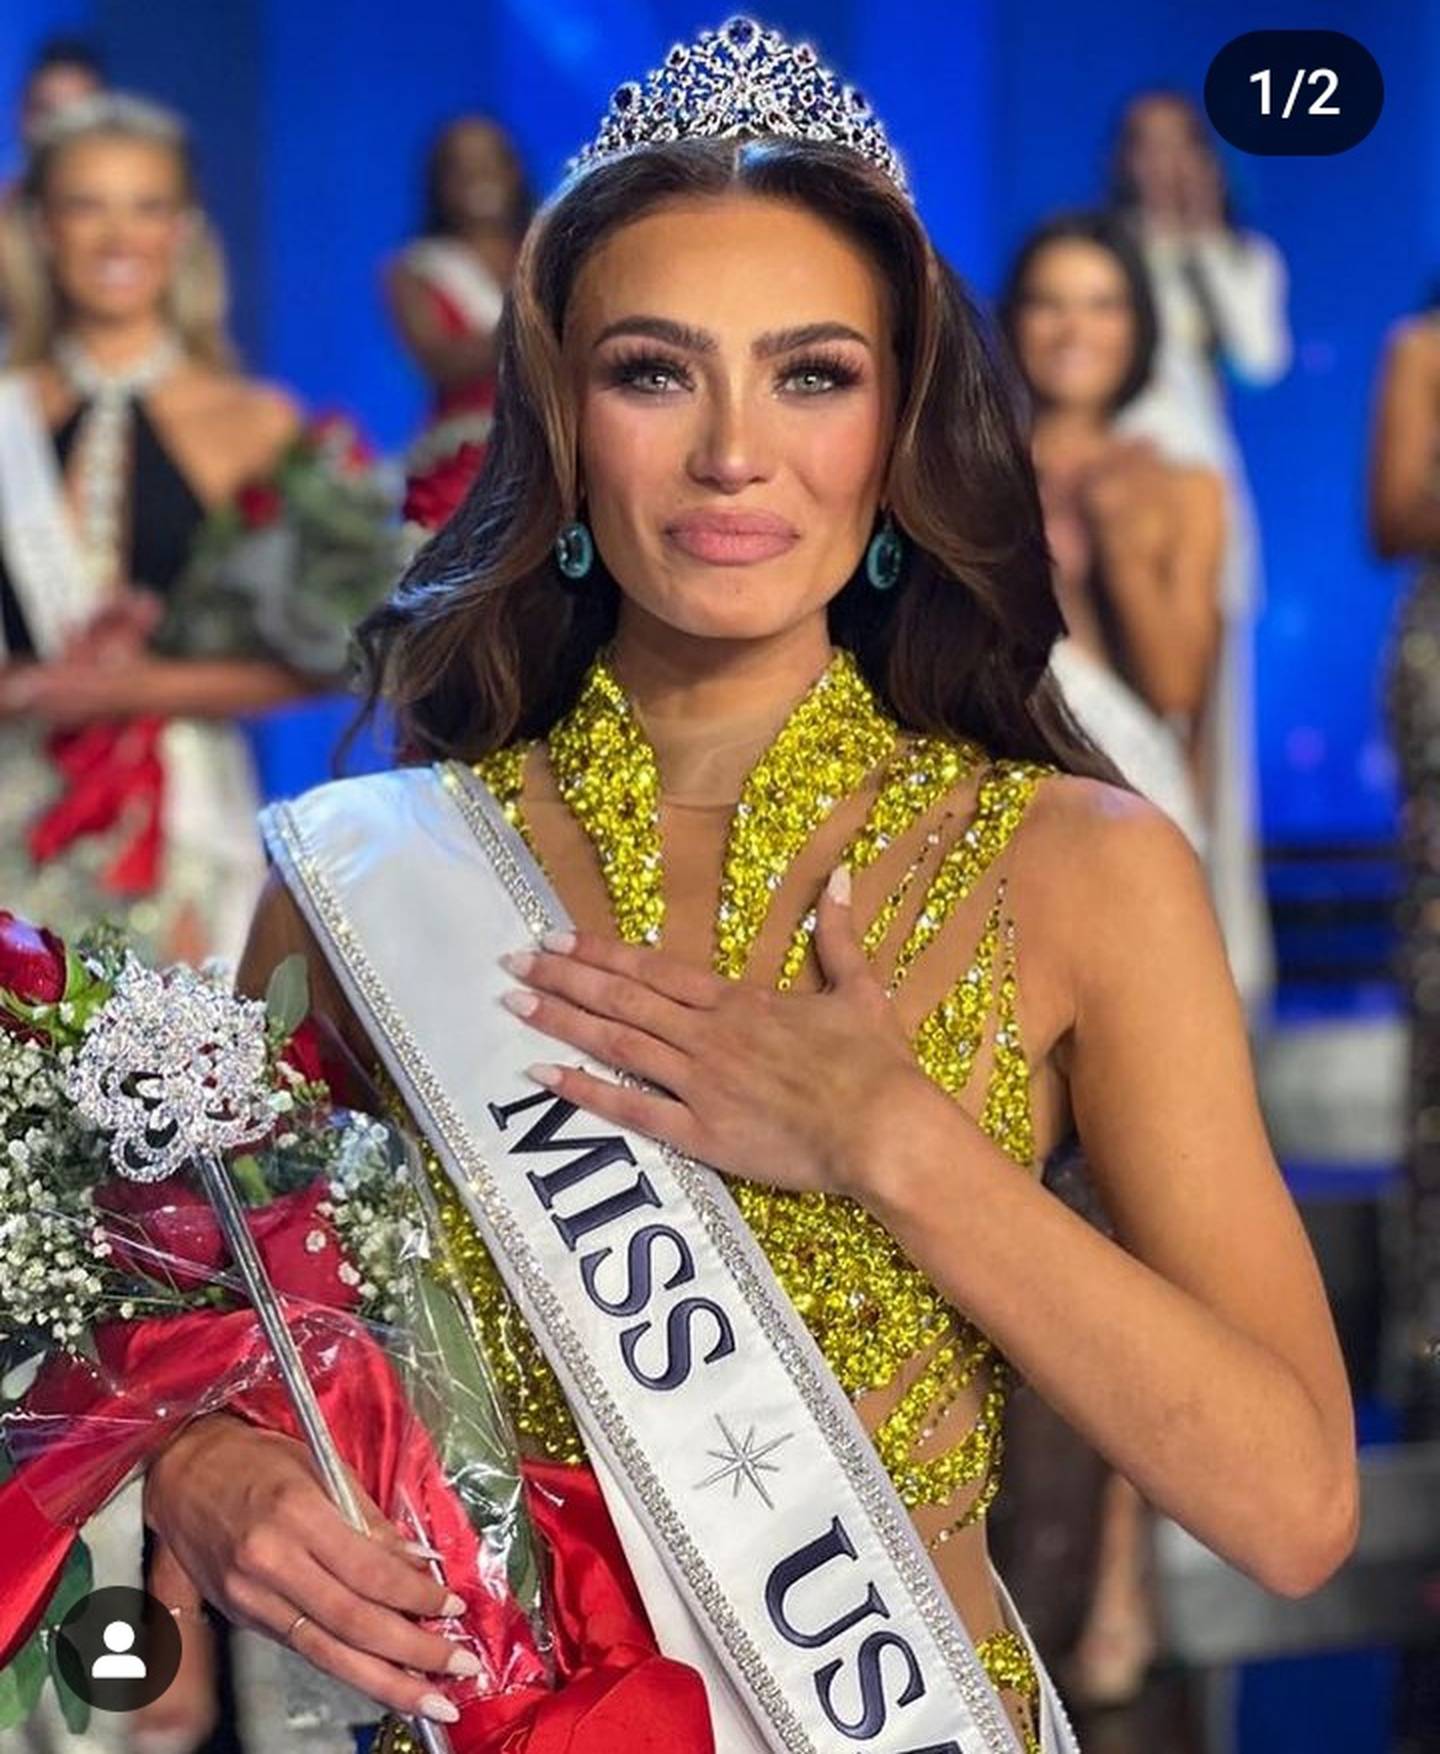 Noelia Voigt Miss USA